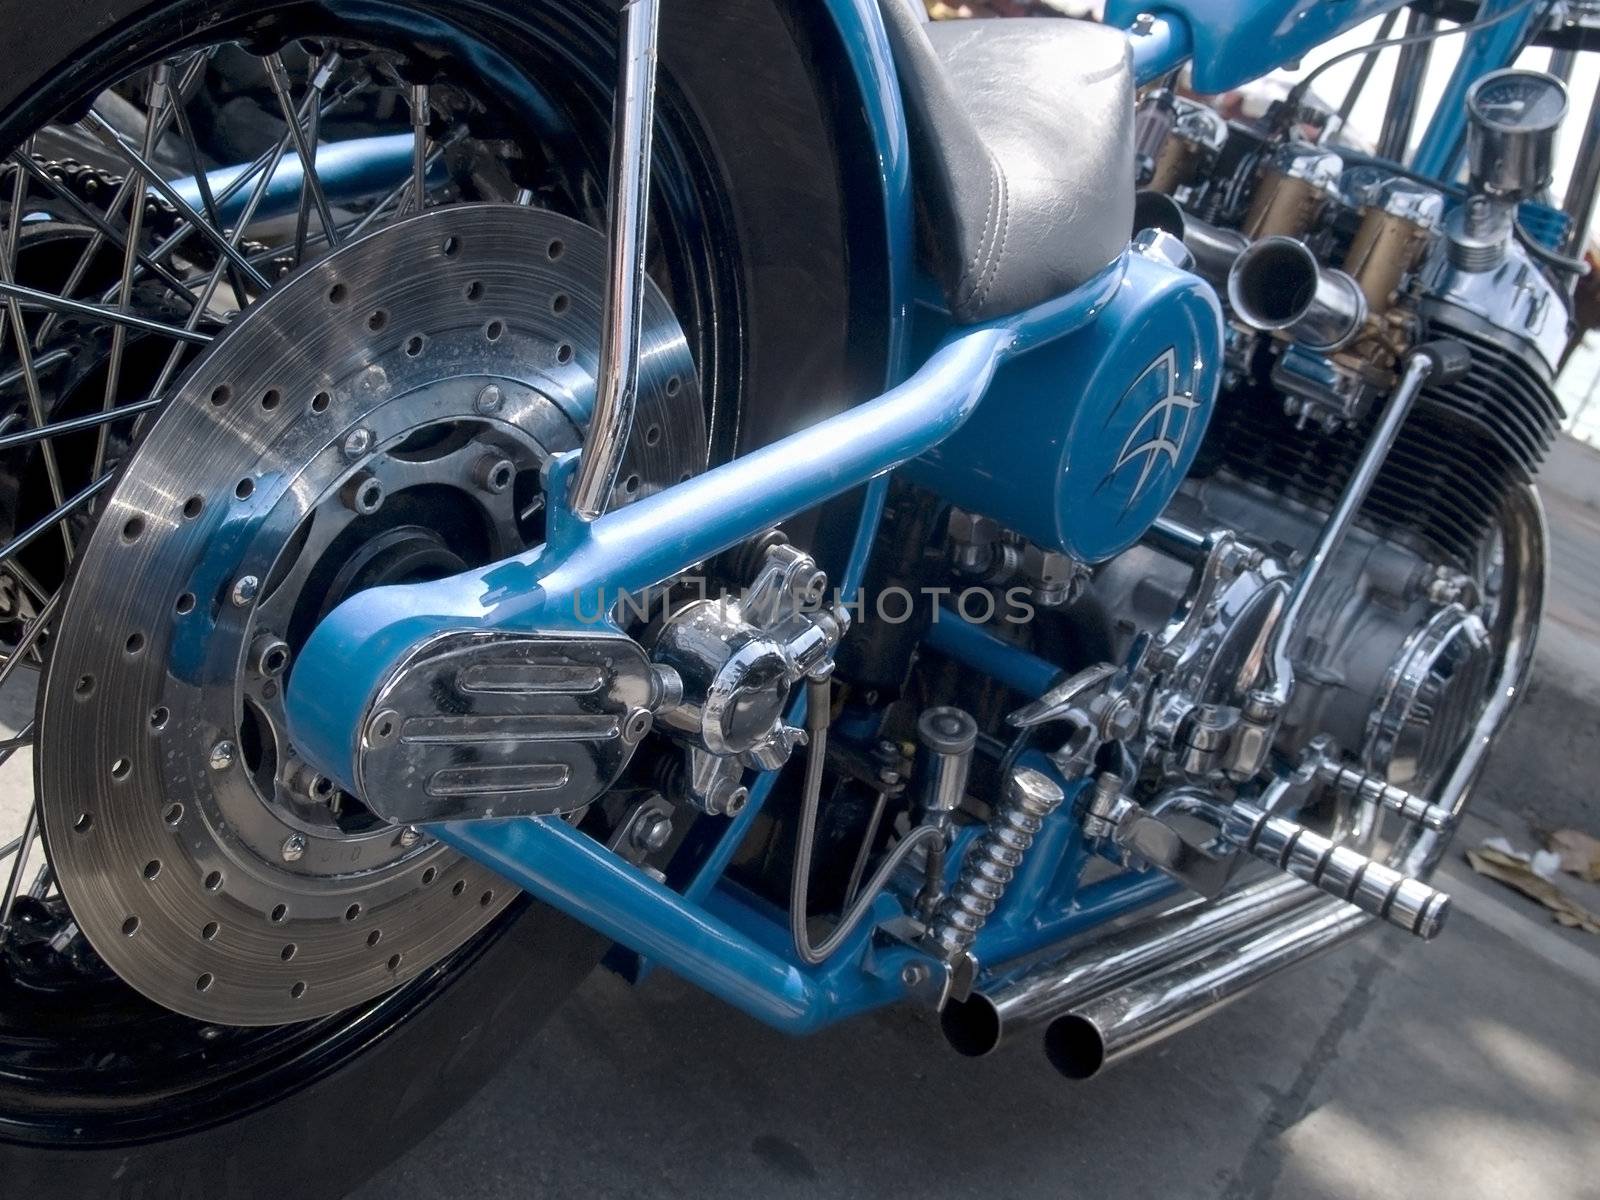 Back wheel and disk brake of custom built chopper motorcycle